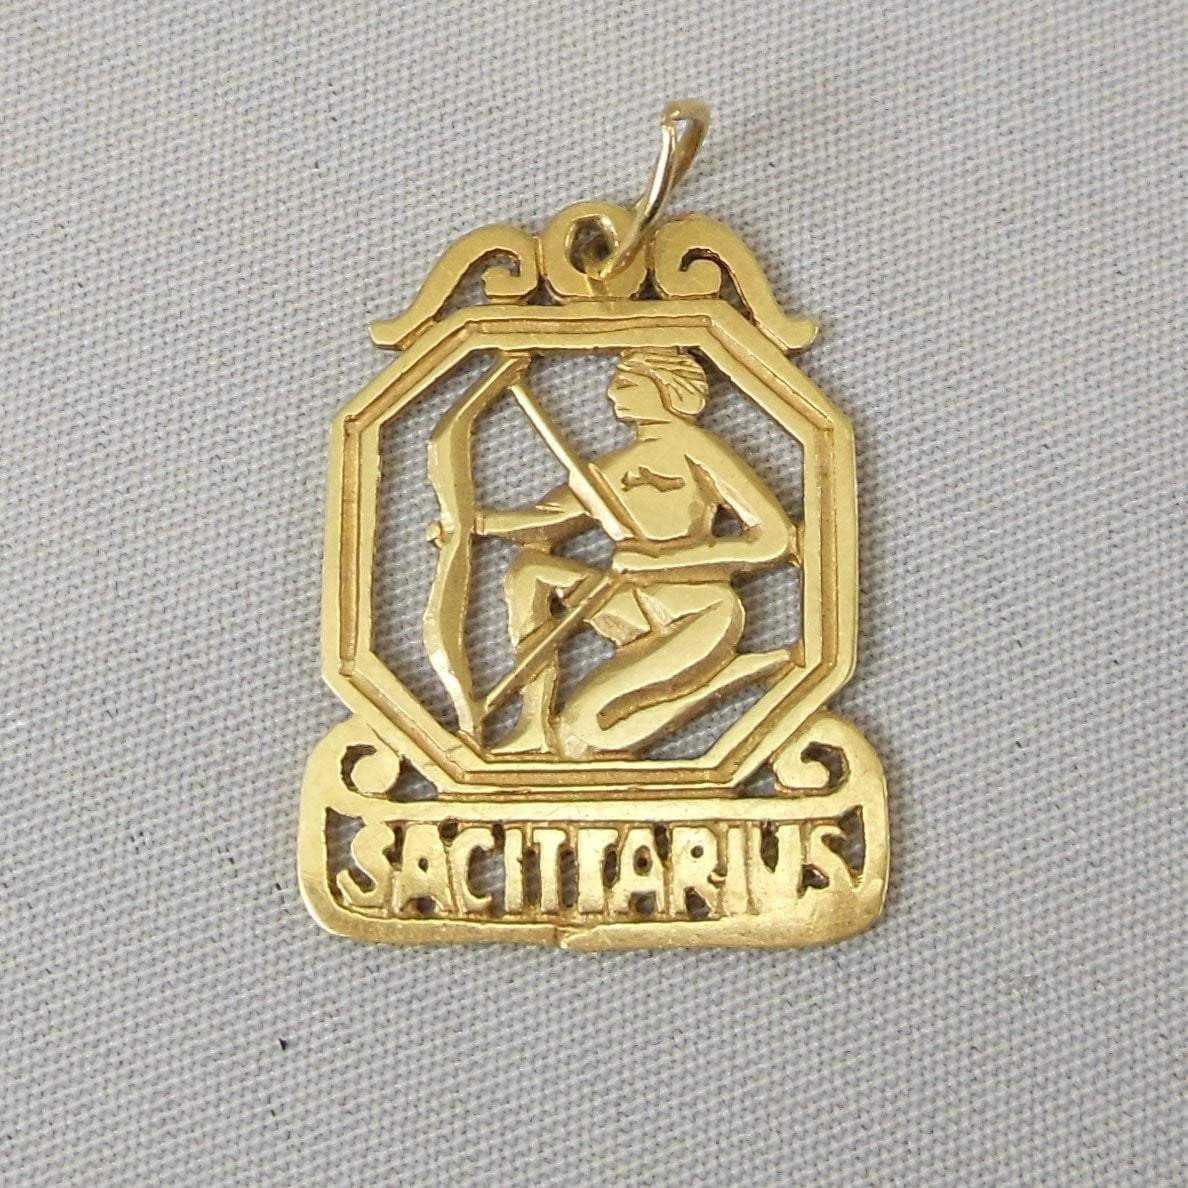 Sagittarius Astrology 14K Yellow Gold Pendant 20 mm 1.4 Grams